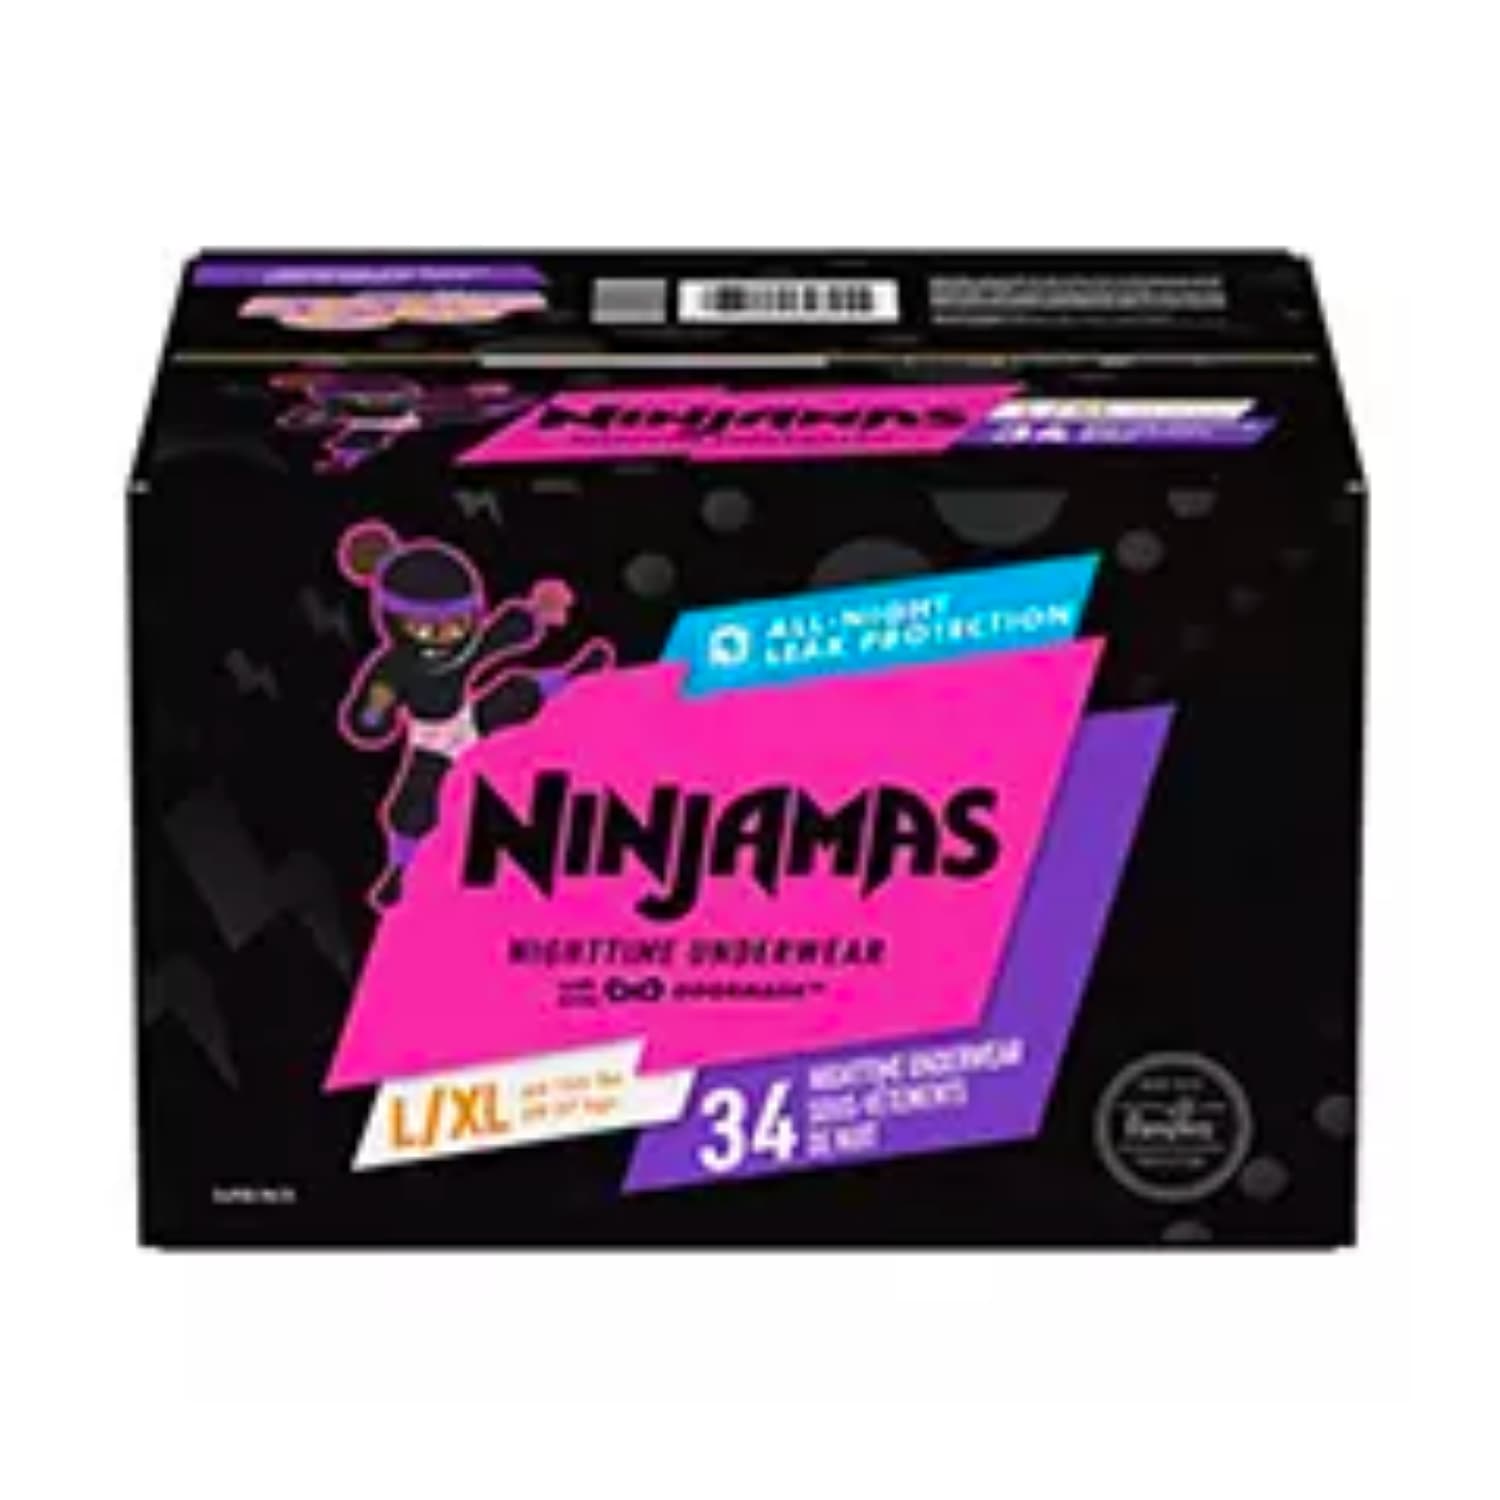 Pampers Ninjamas Nighttime Bedwetting Underwear Girl (Size L/XL, 34 C -  MedaKi